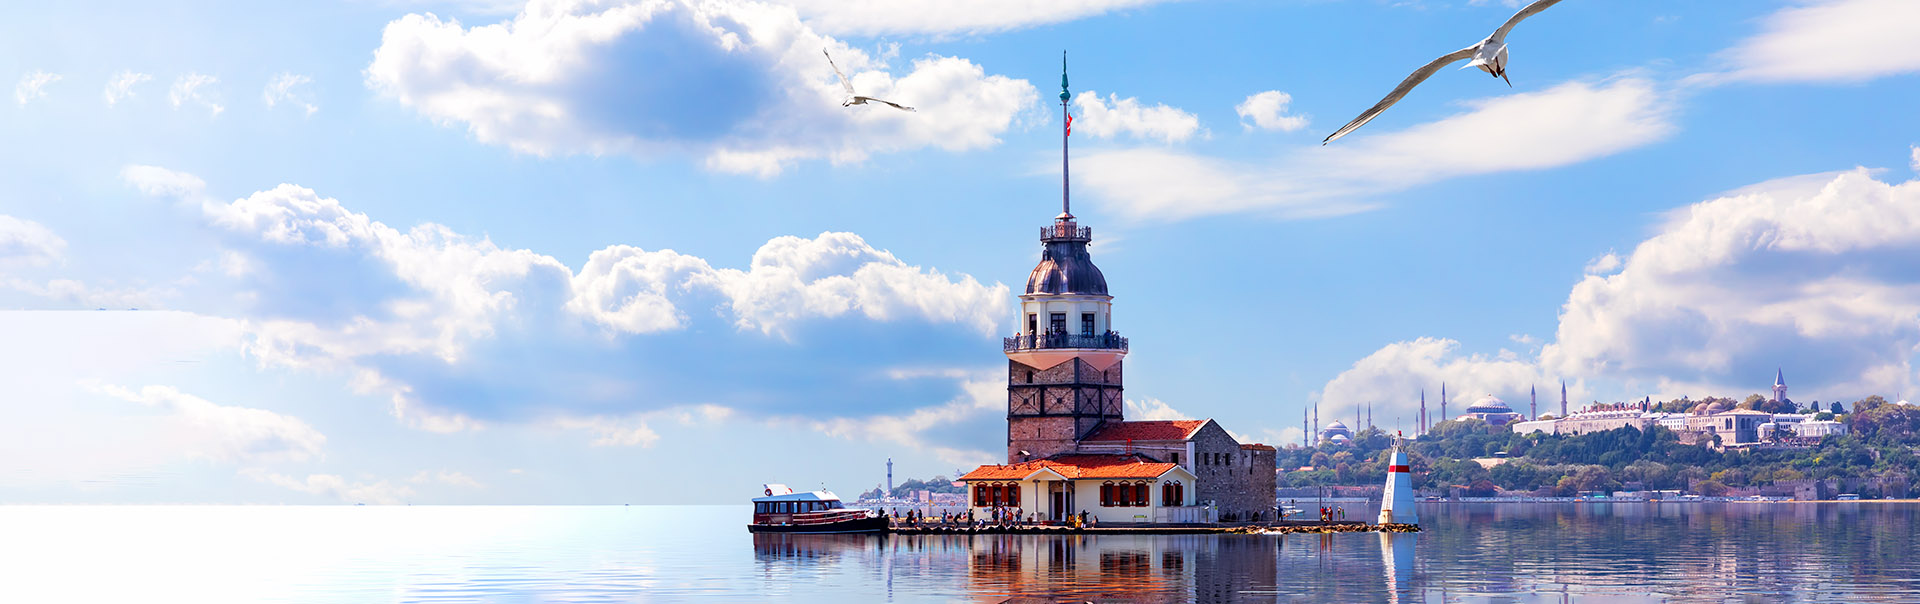 Leander's Tower in the Marmara sea, the Bosporus. Istanbul